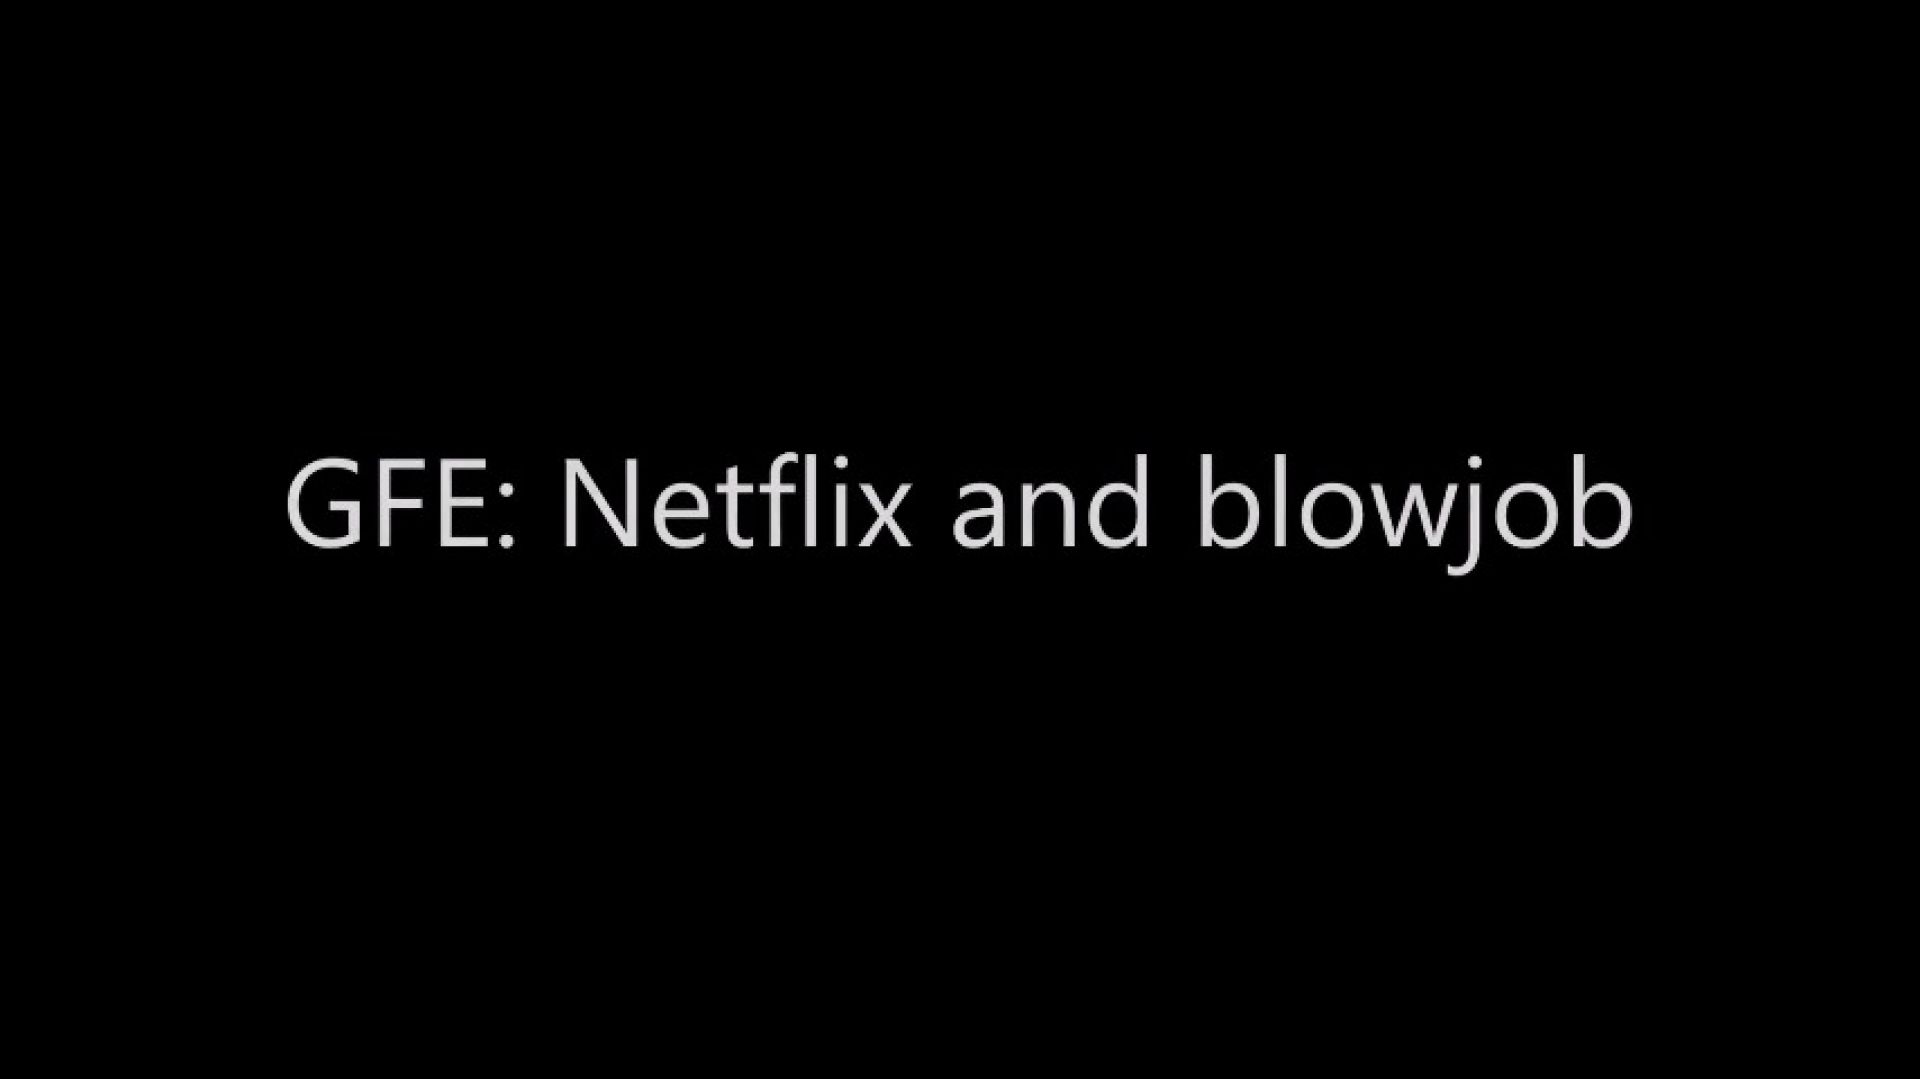 leaked GFE: Netflix and blowjob thumbnail